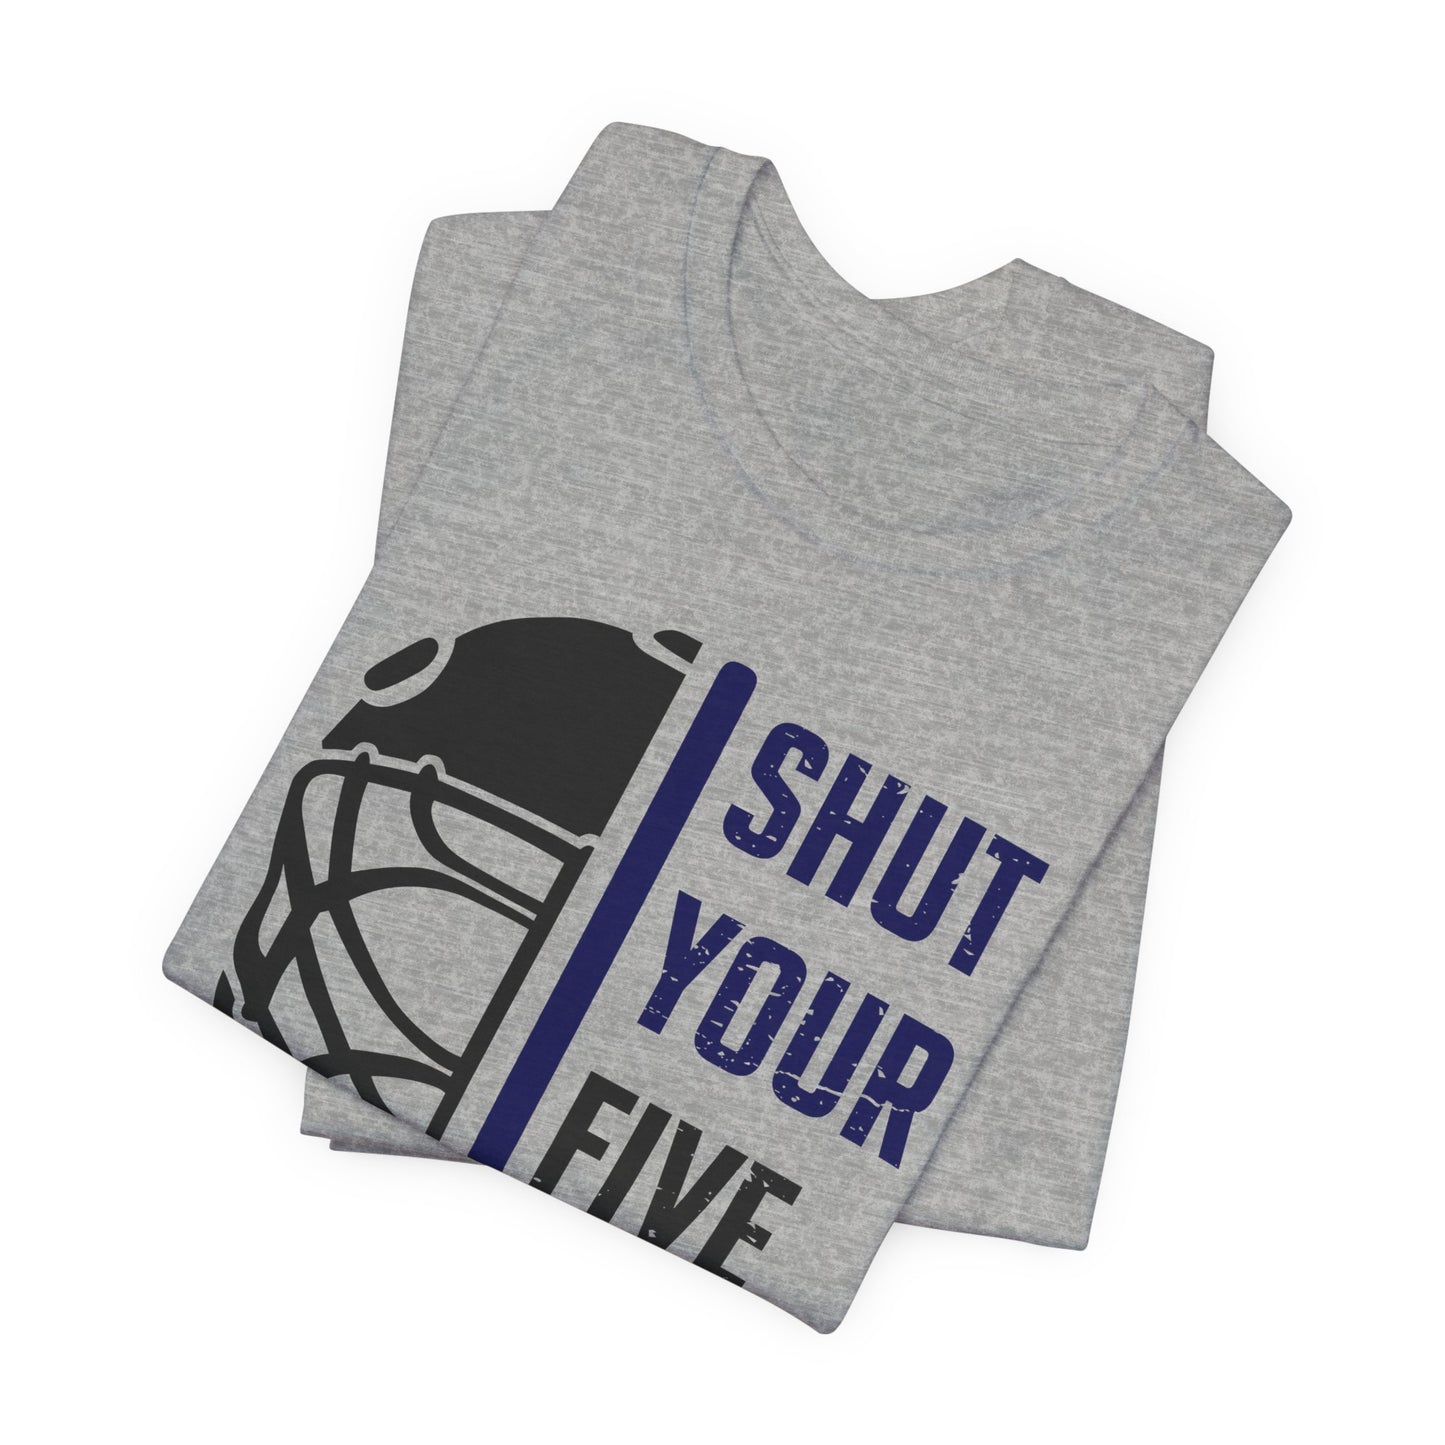 Shut Your Five Hole - Mens T-Shirt